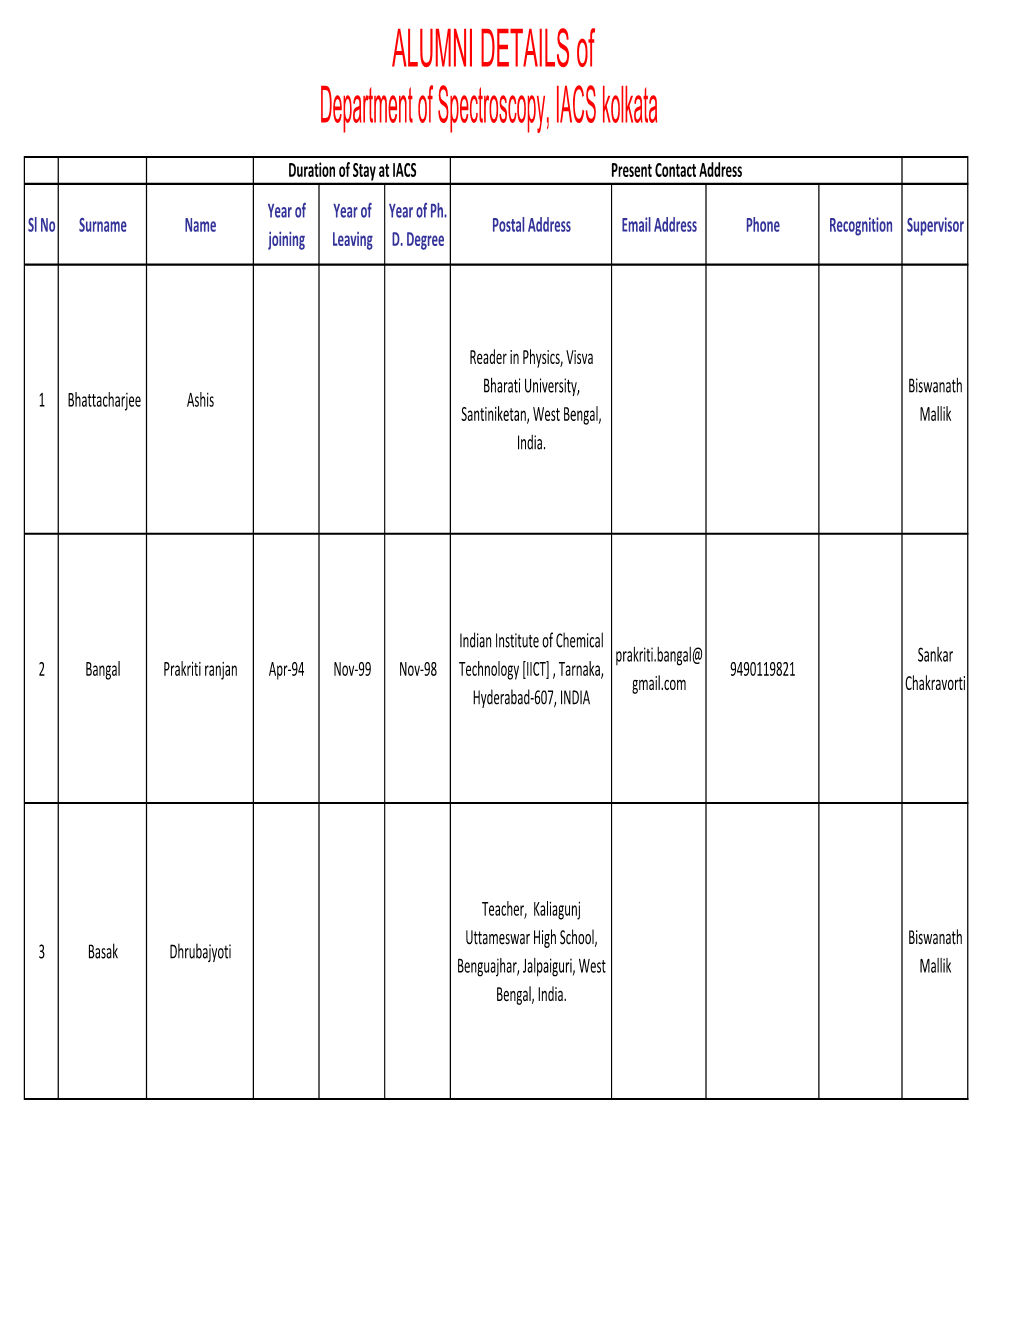 ALUMNI DETAILS of Department of Spectroscopy, IACS Kolkata